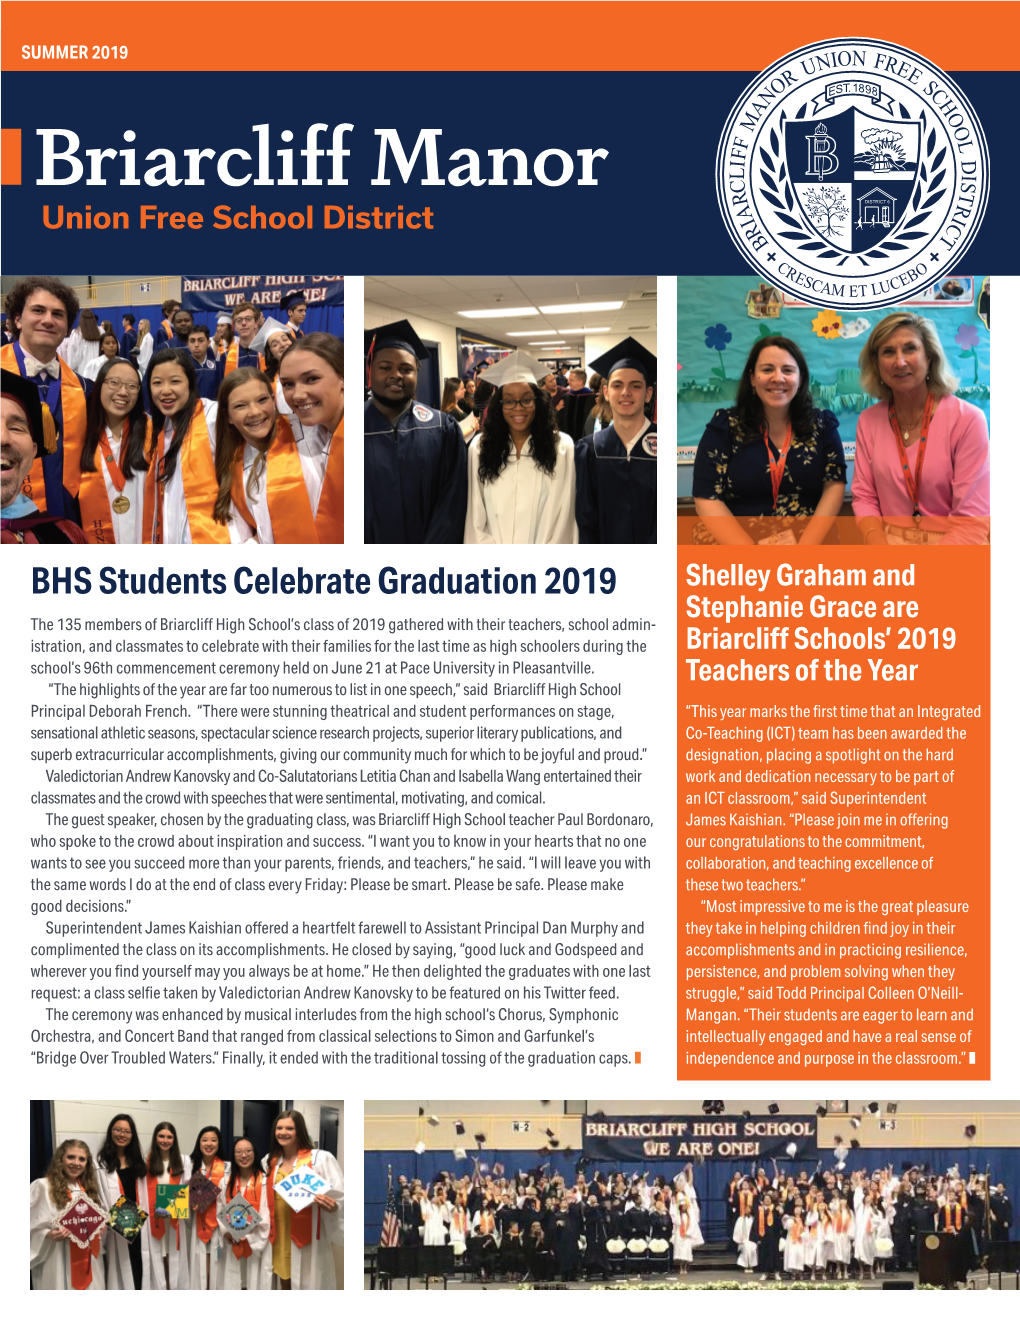 Briarcliff Manor Union Free School District